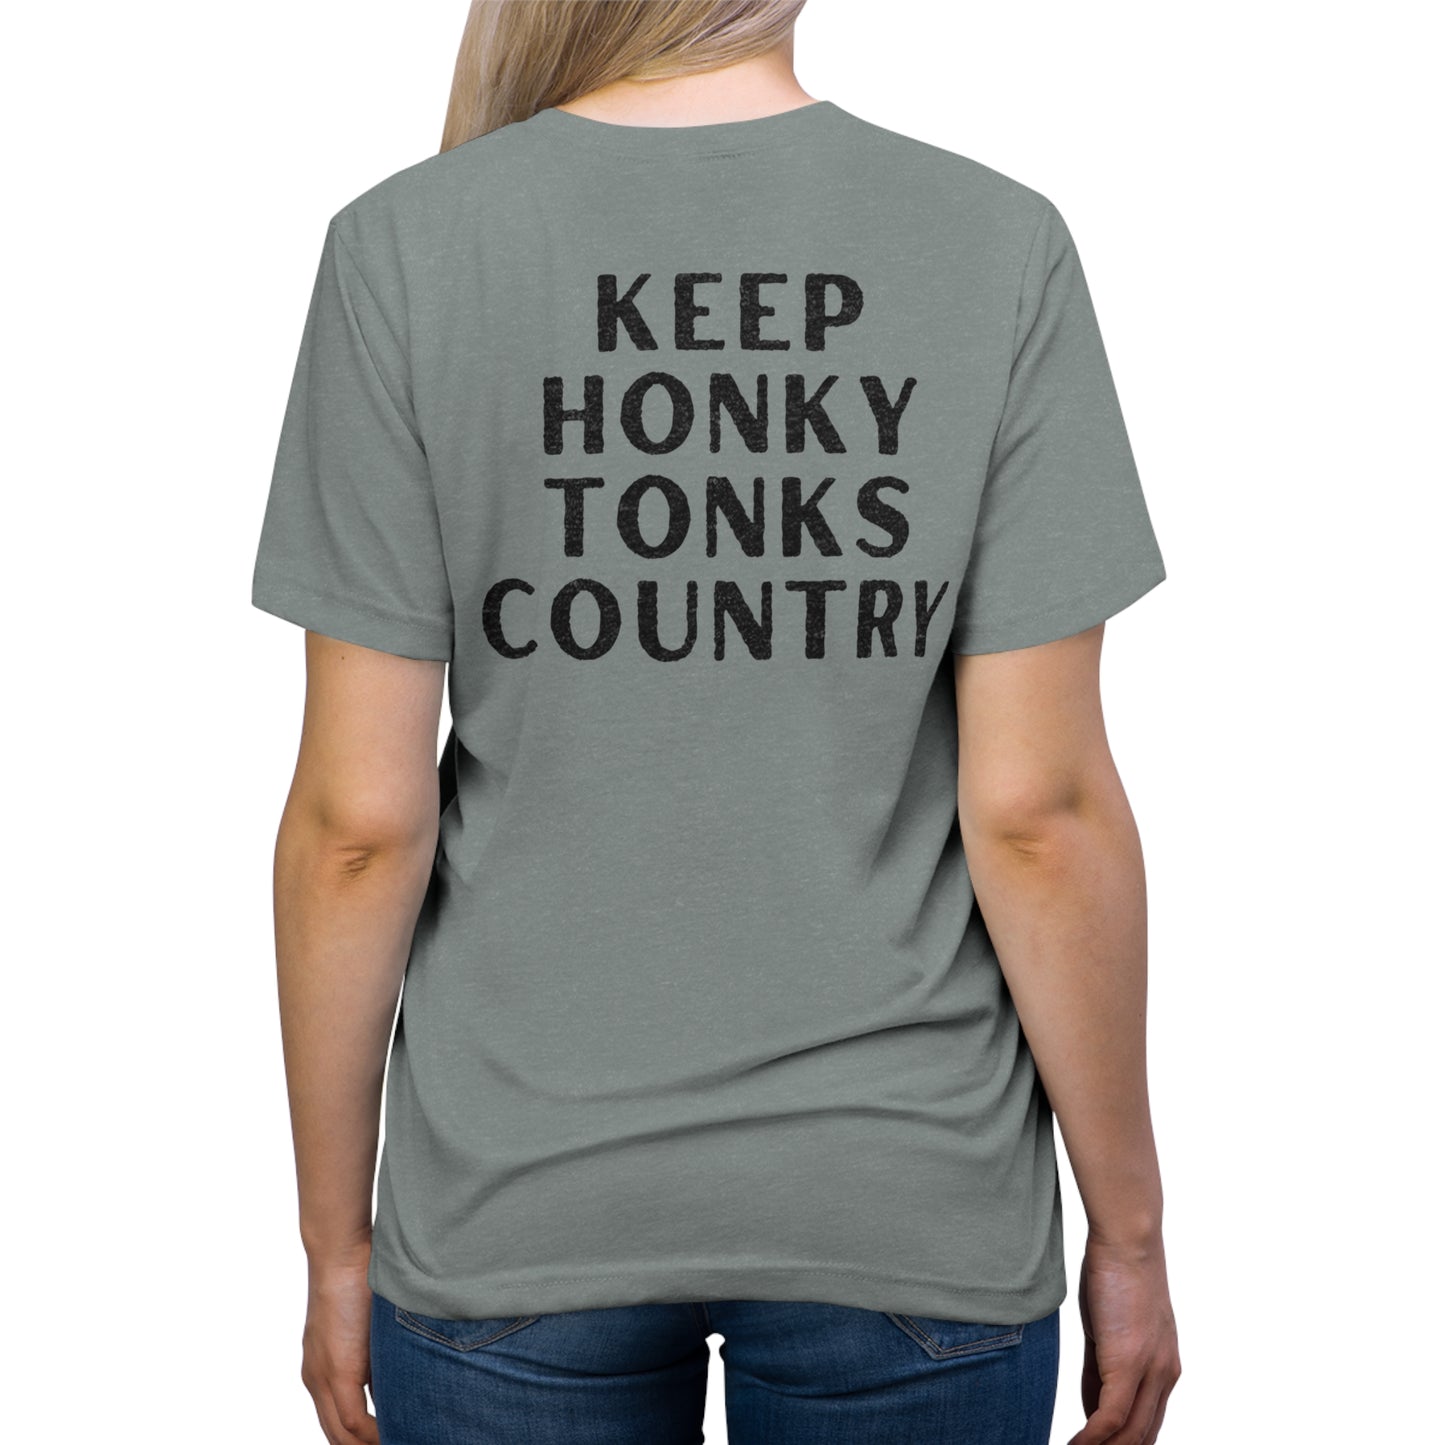 Keep Honky Tonks Country (Black)